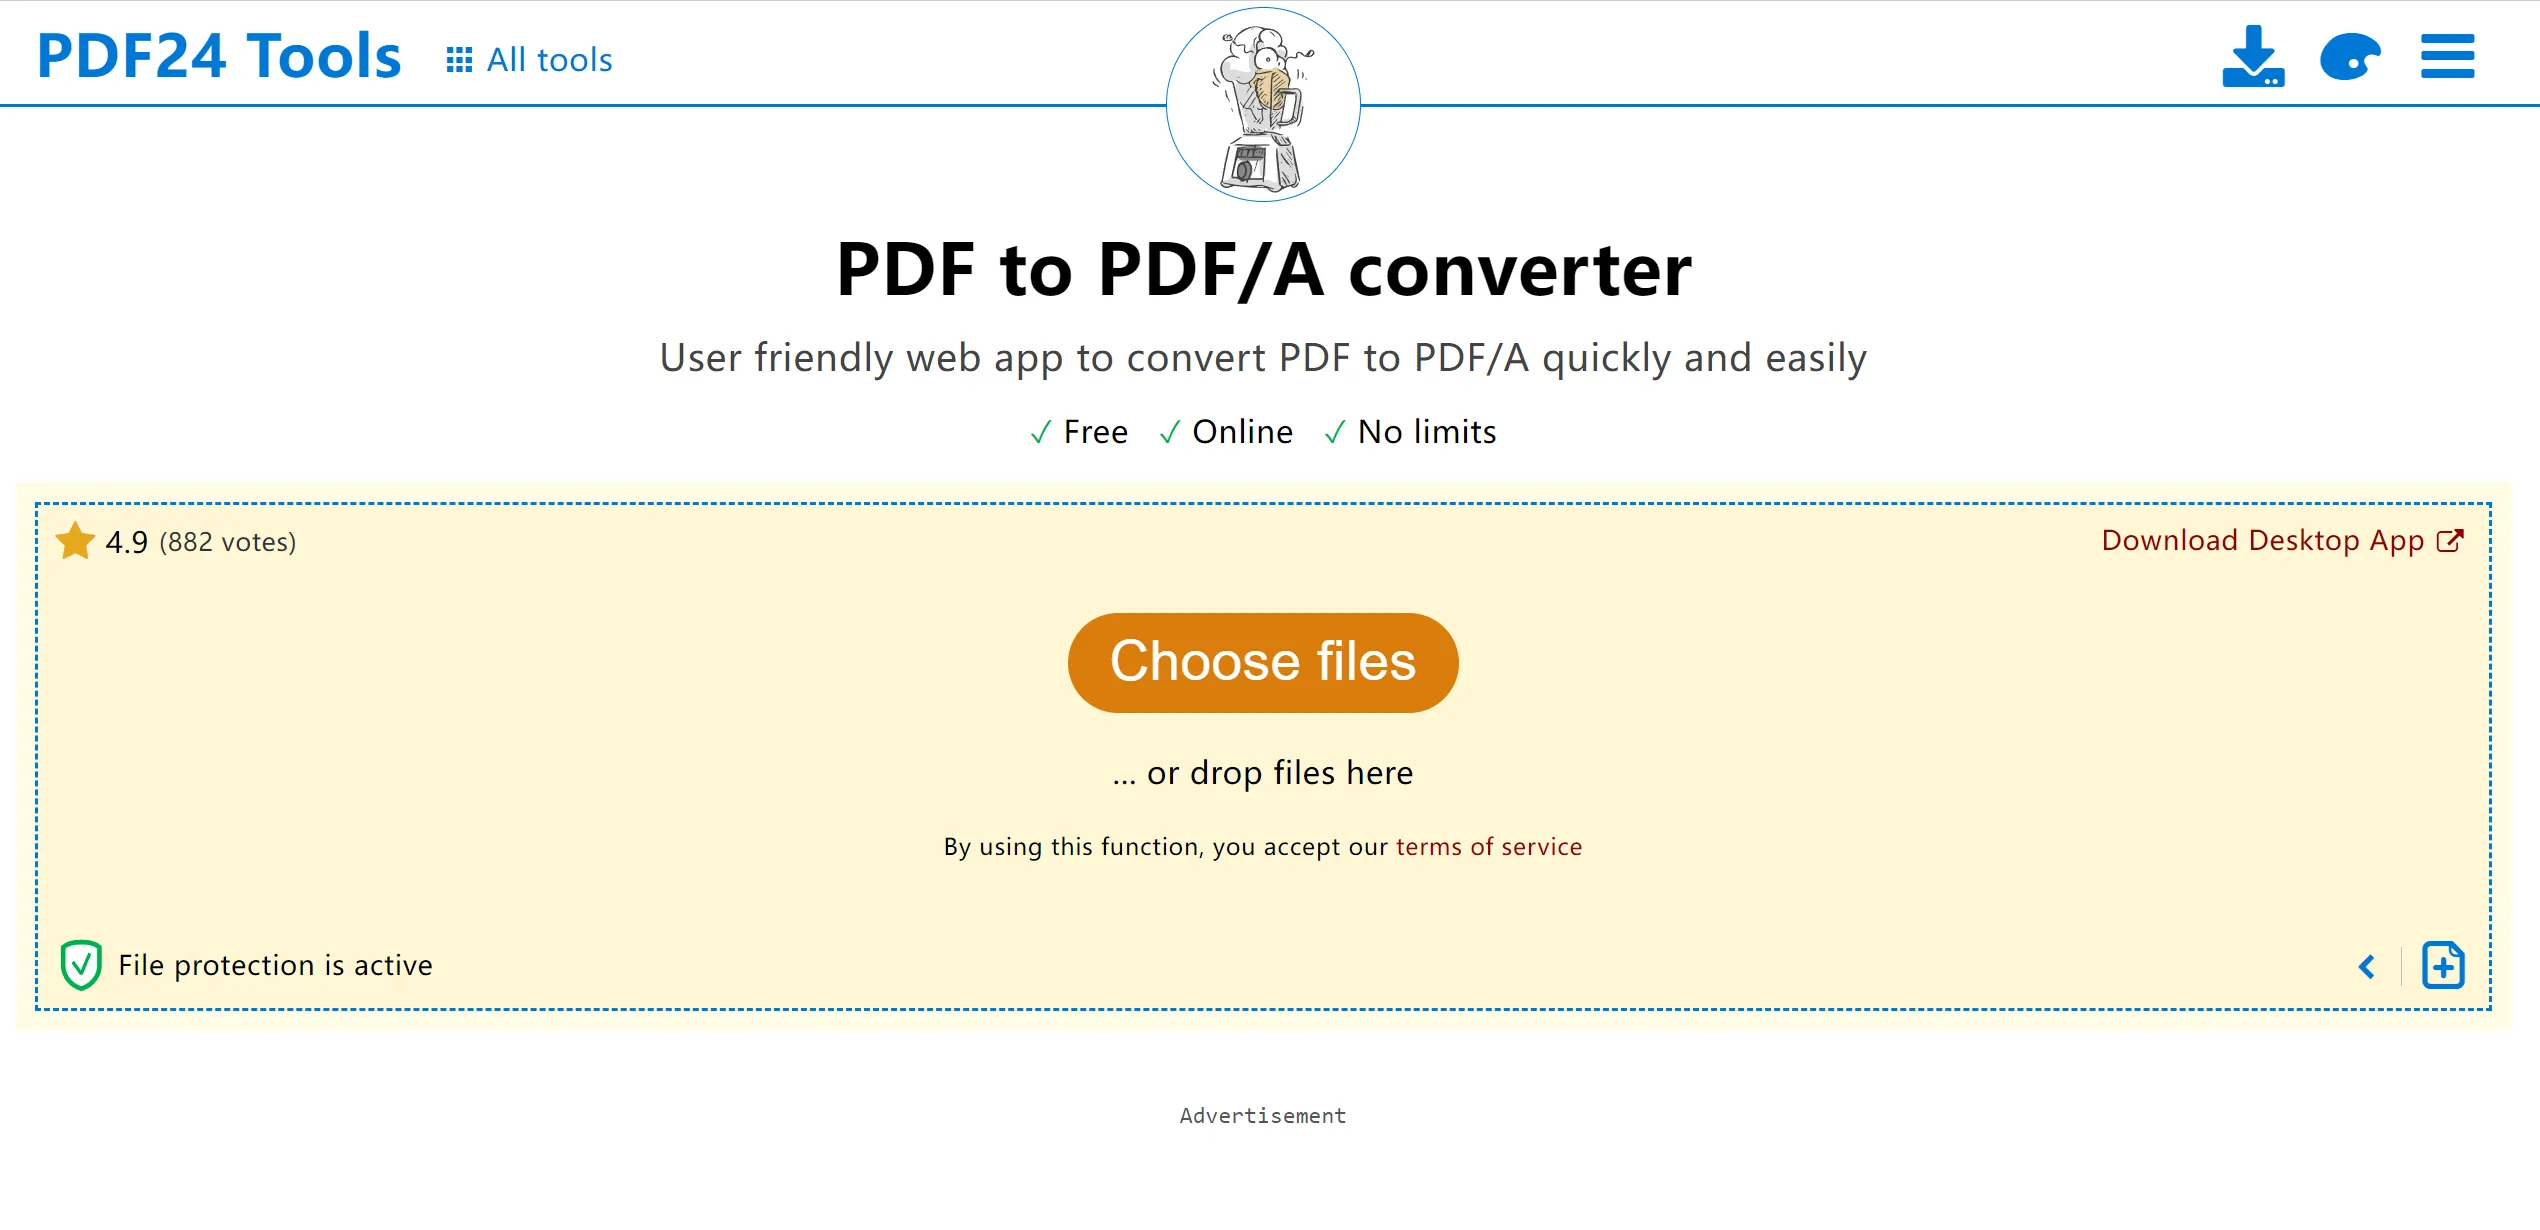 PDF24TOOLS PDF to PDF/A Converter